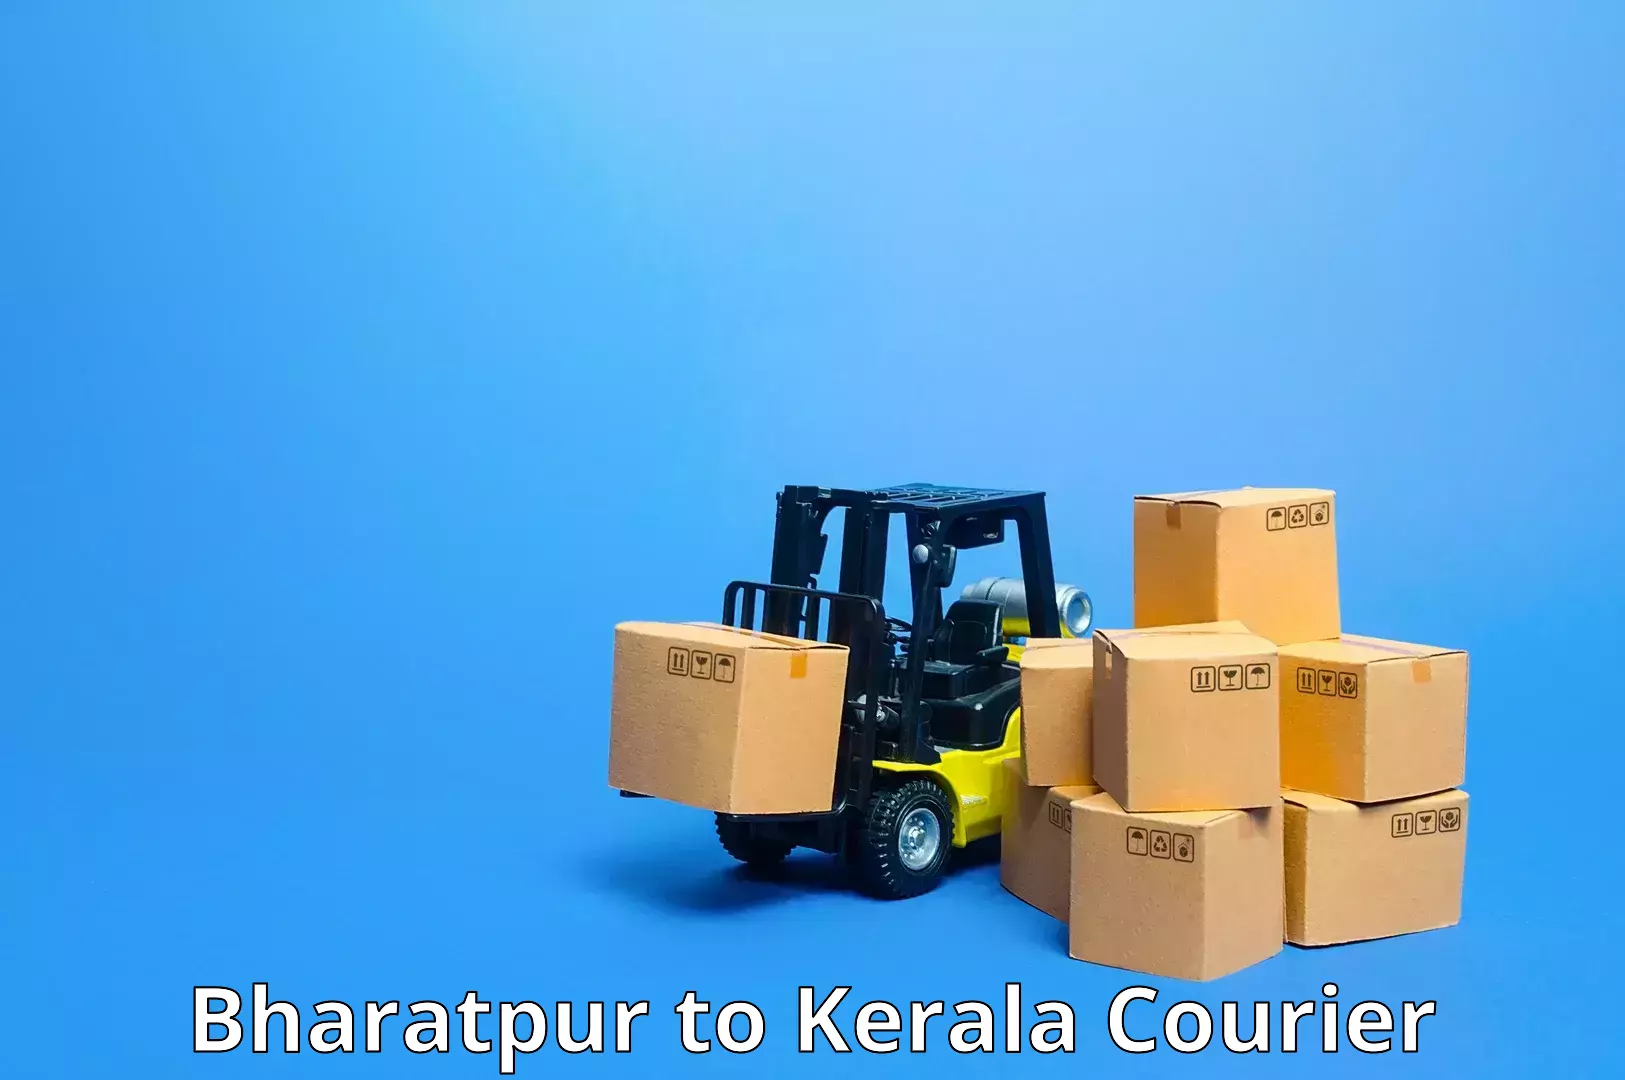 Tech-enabled shipping Bharatpur to Kanhangad